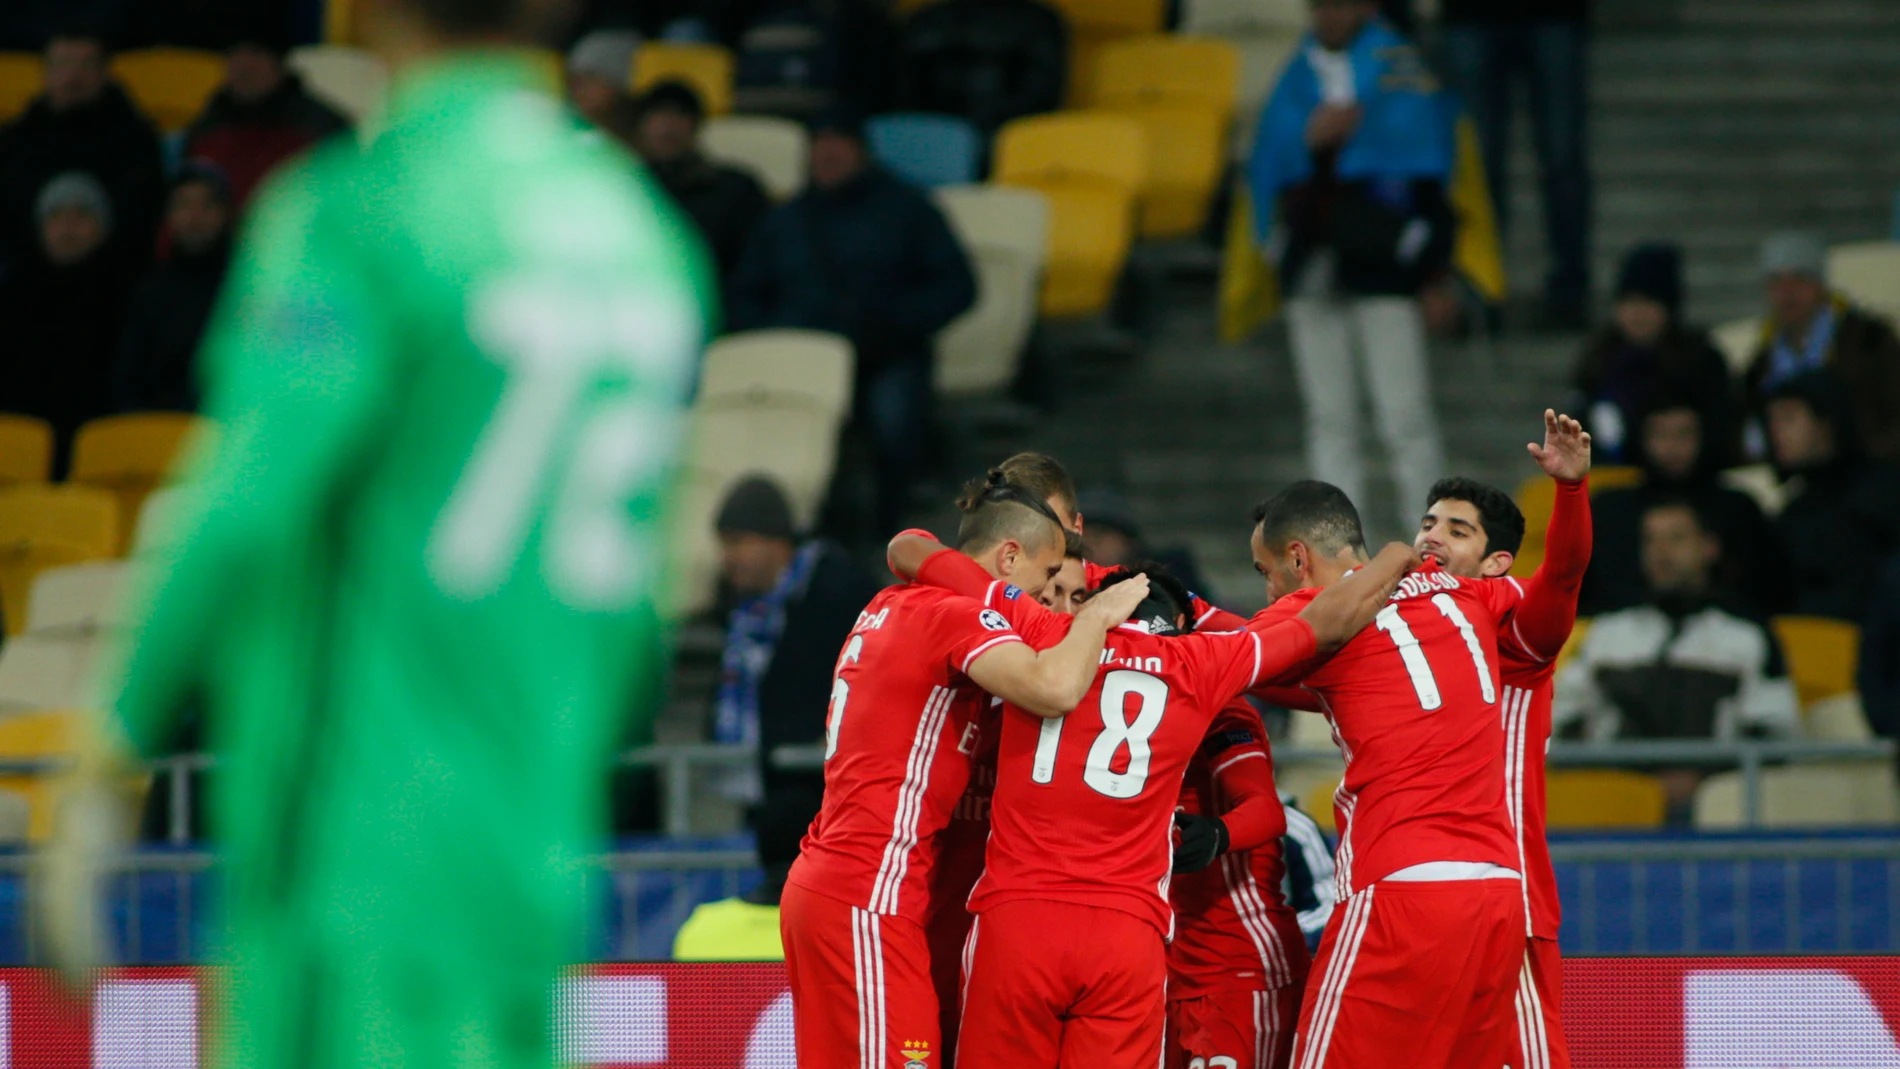 Los jugadores del Benfica celebran el gol de Cervi